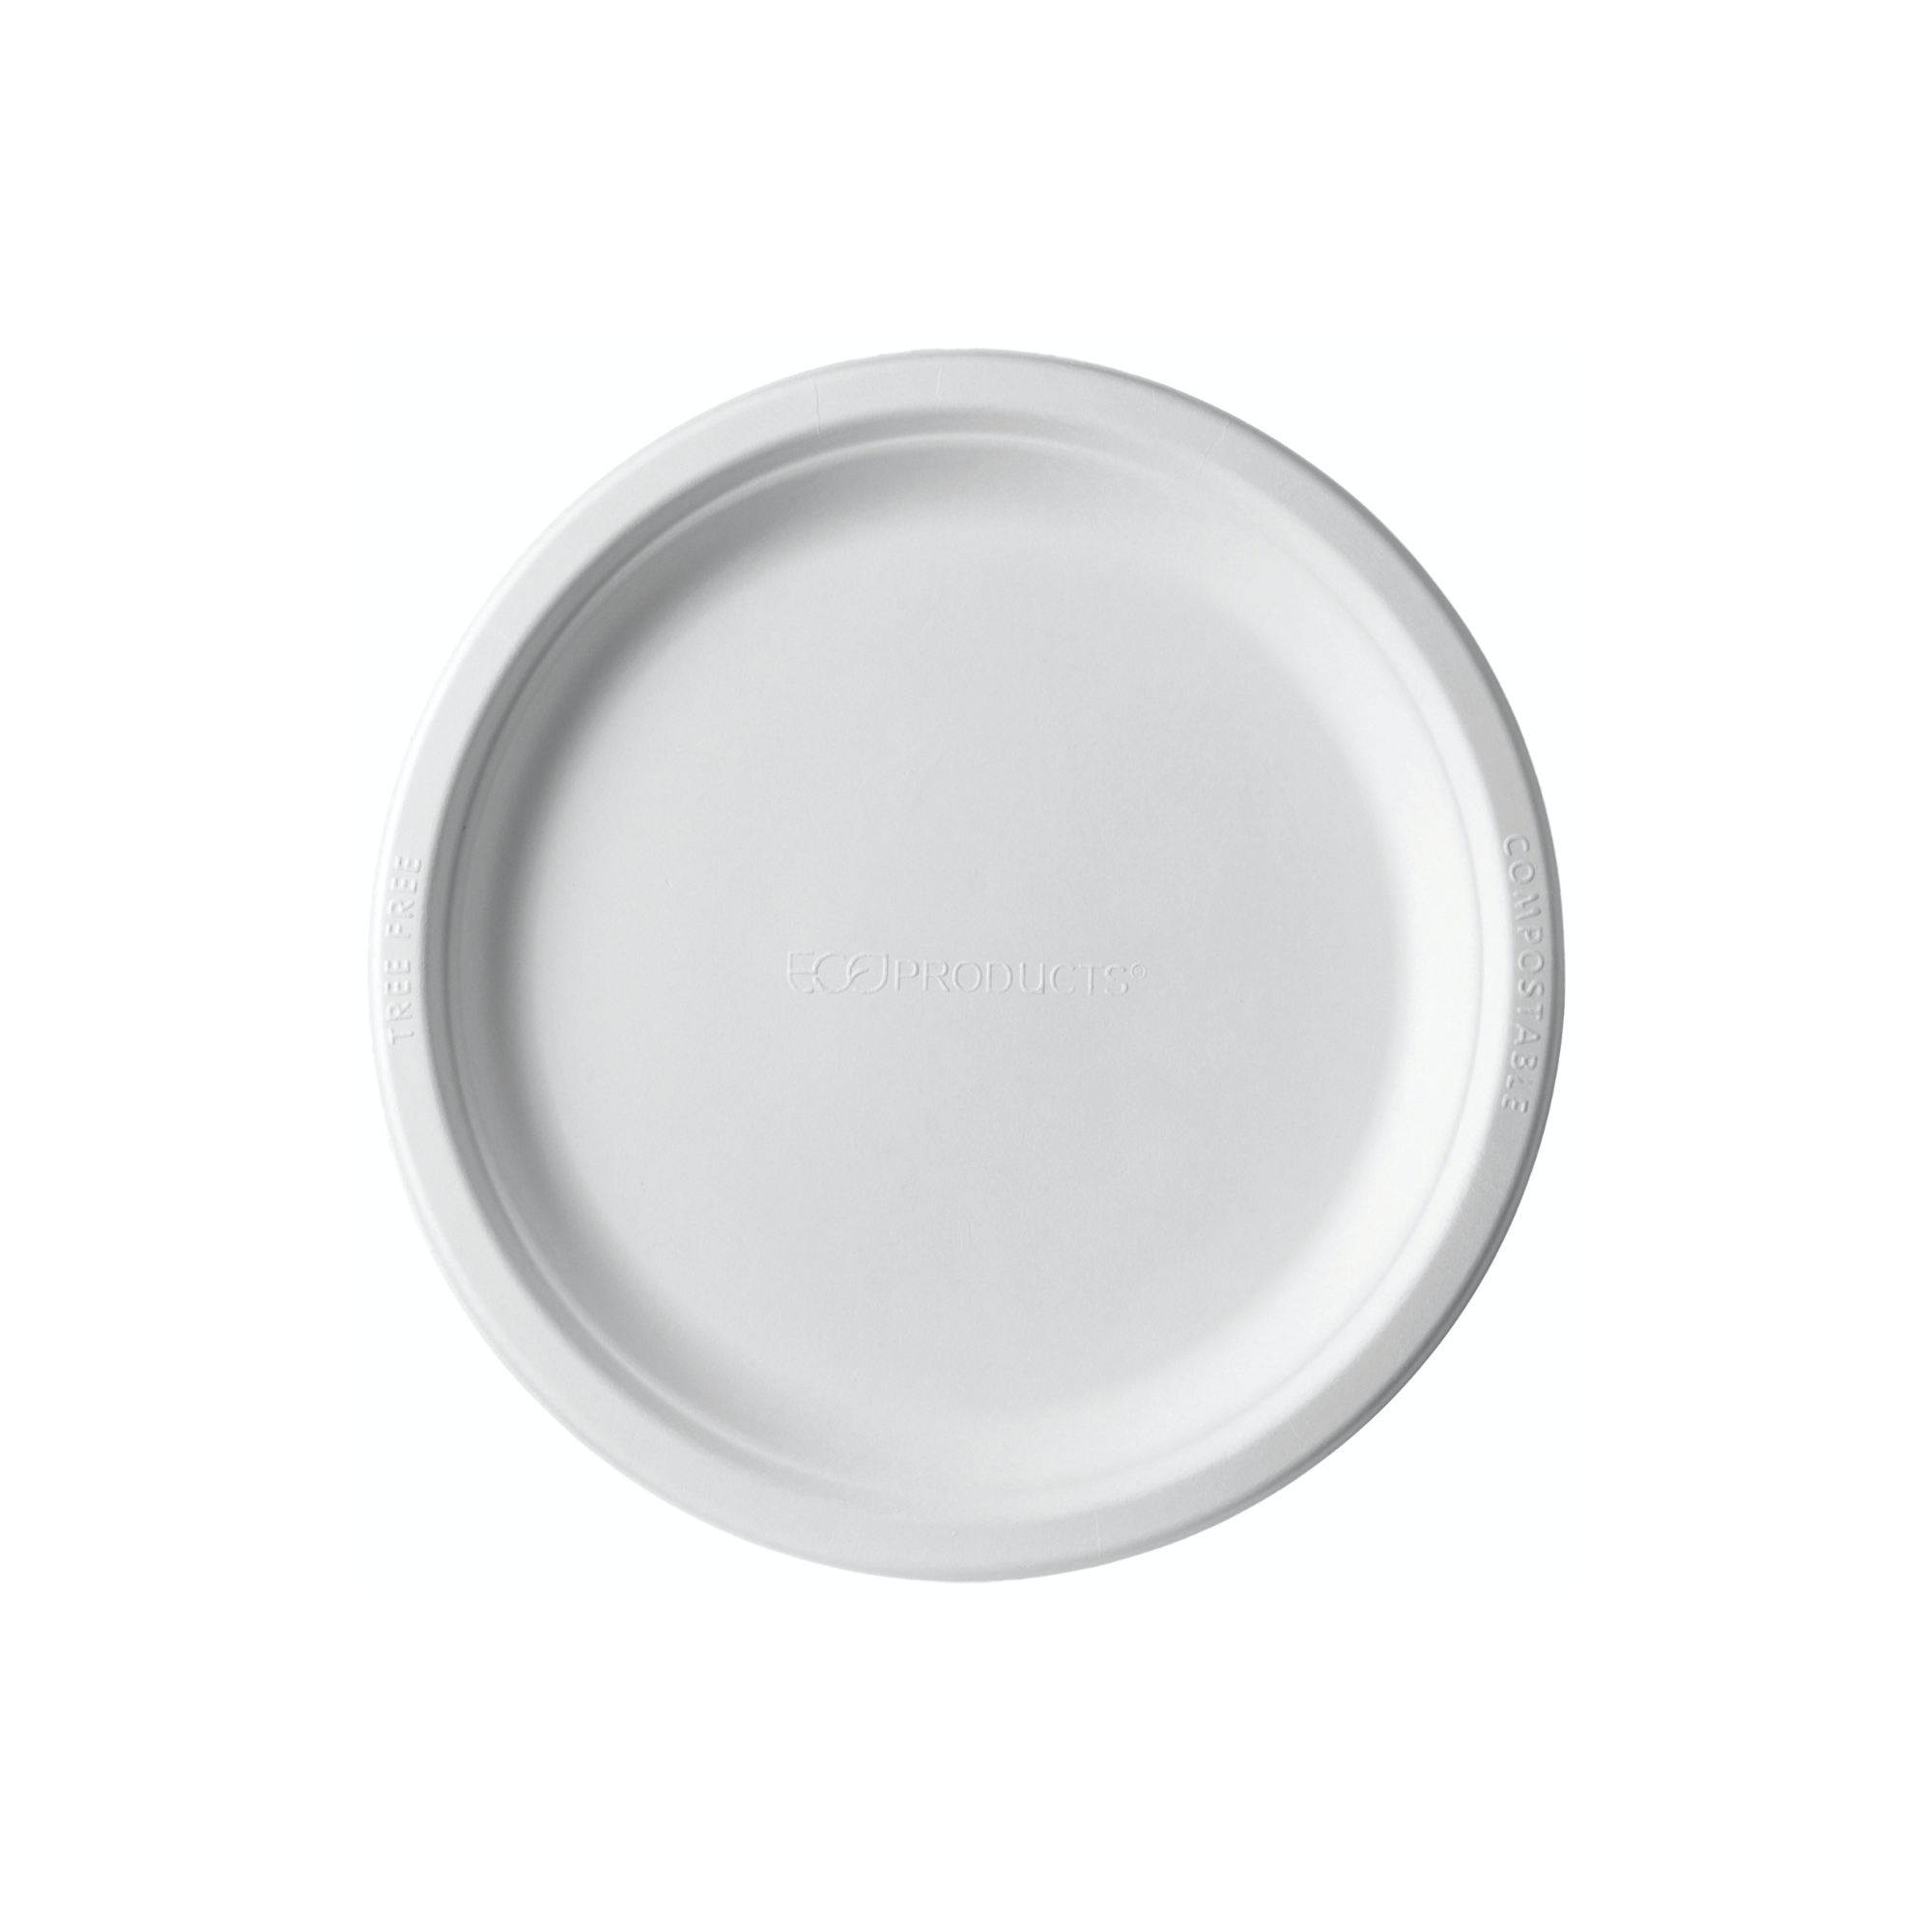  - Cukornád lapos tányér 175 mm - 125 db/cs - Greenstic